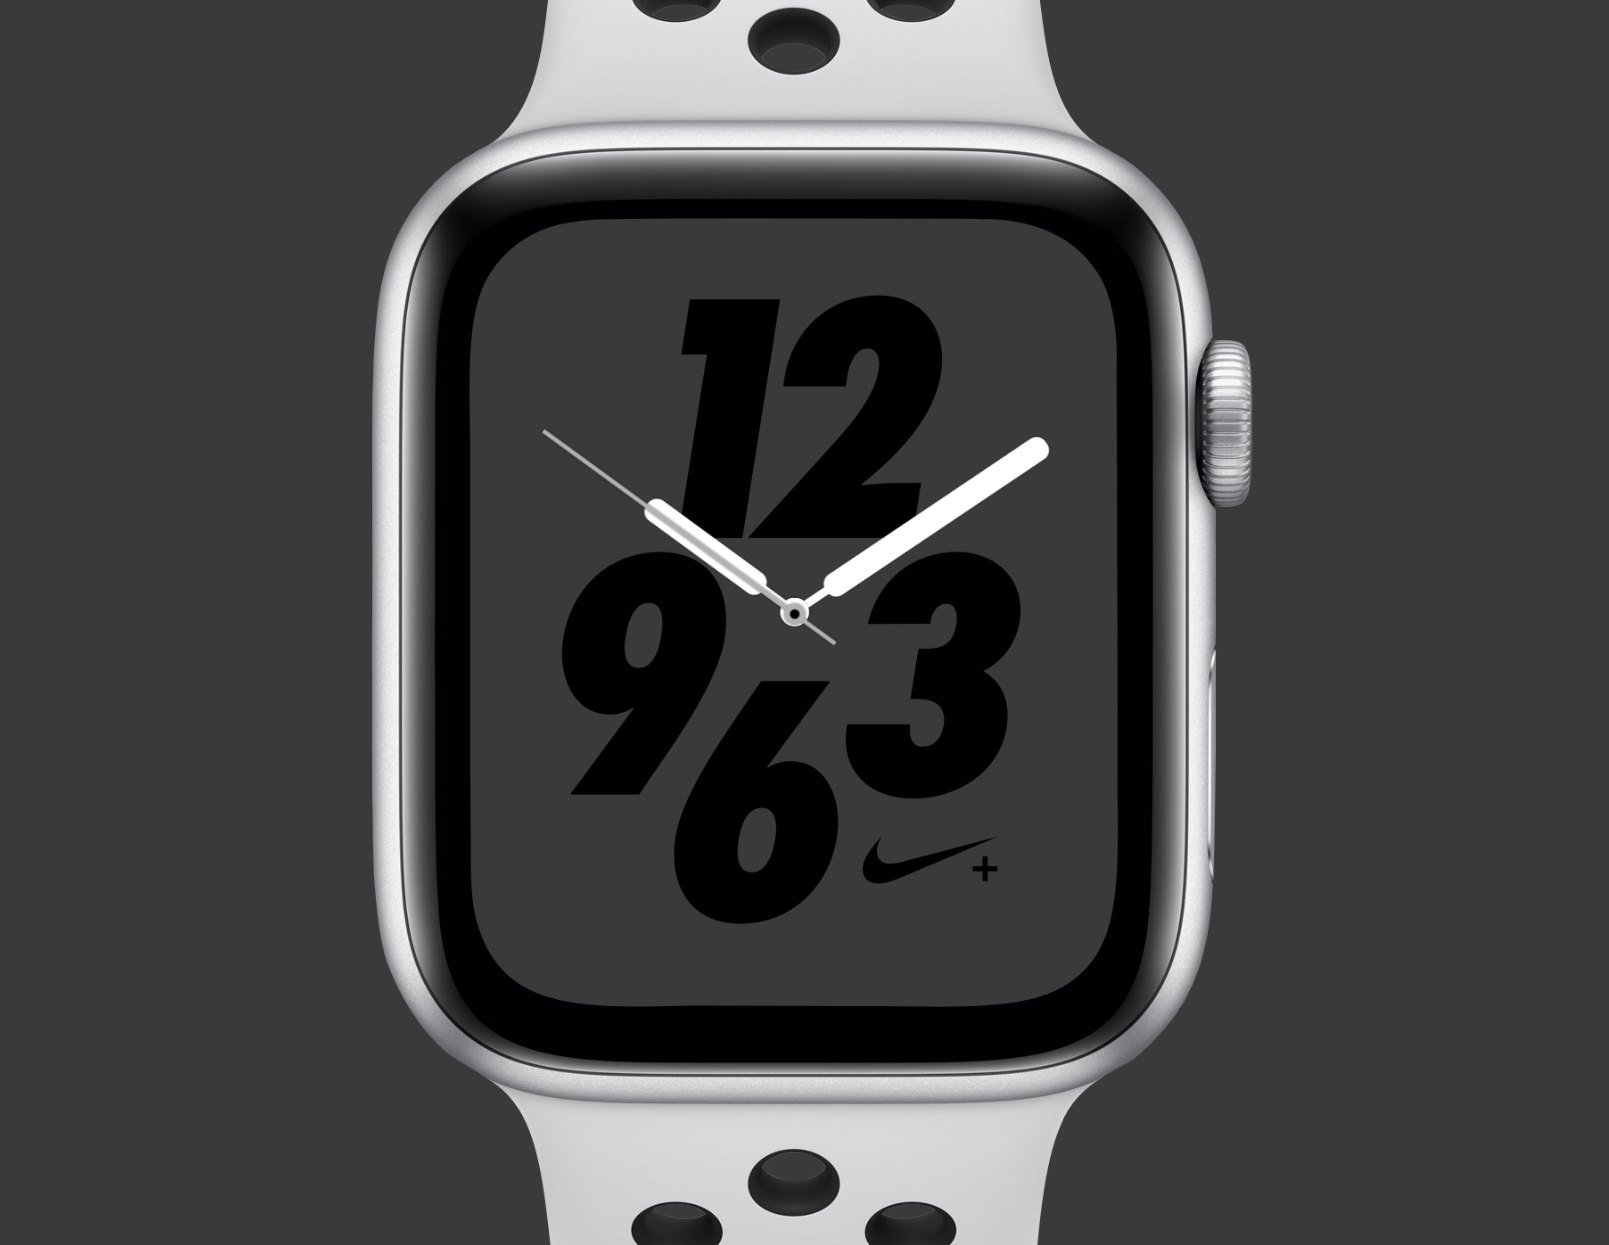 Циферблат часов на айфоне. Эппл вотч 7 Nike. Циферблаты найк для Эппл вотч. Циферблат часов Apple IWATCH 7 найк. Apple watch Nike Series 7 GPS.